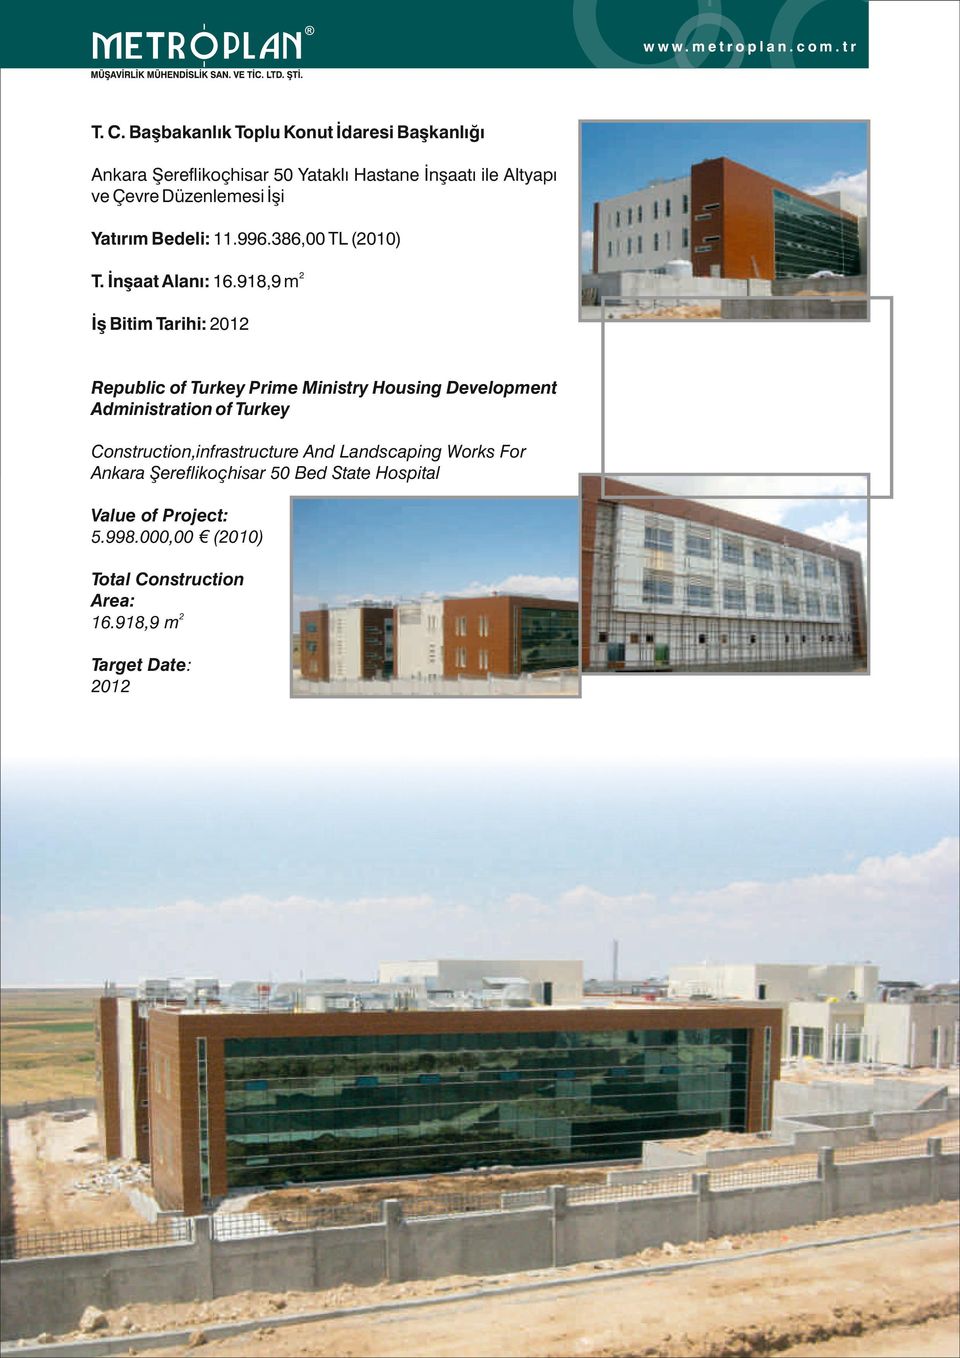 918,9 m İş Bitim Tarihi: 01 Republic of Turkey Prime Ministry Housing Development Administration of Turkey